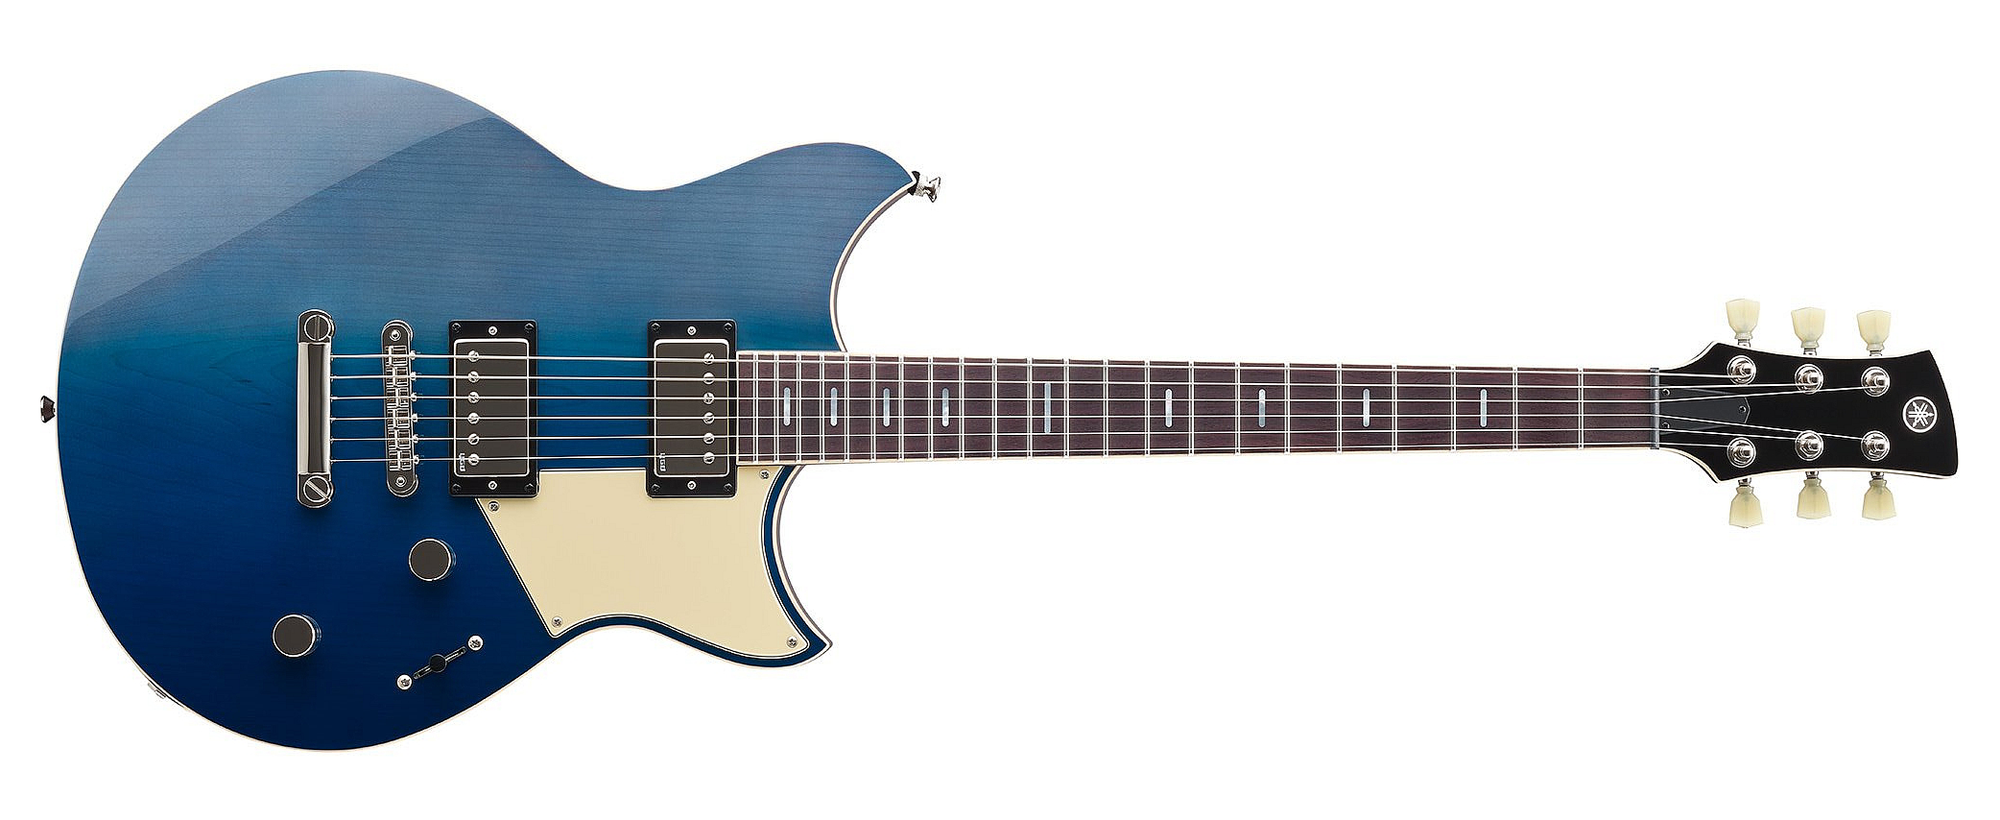 Yamaha RSP20 MBU 6-String RH Revstar Electric Guitar in Moonlight Blue with Hardshell Case